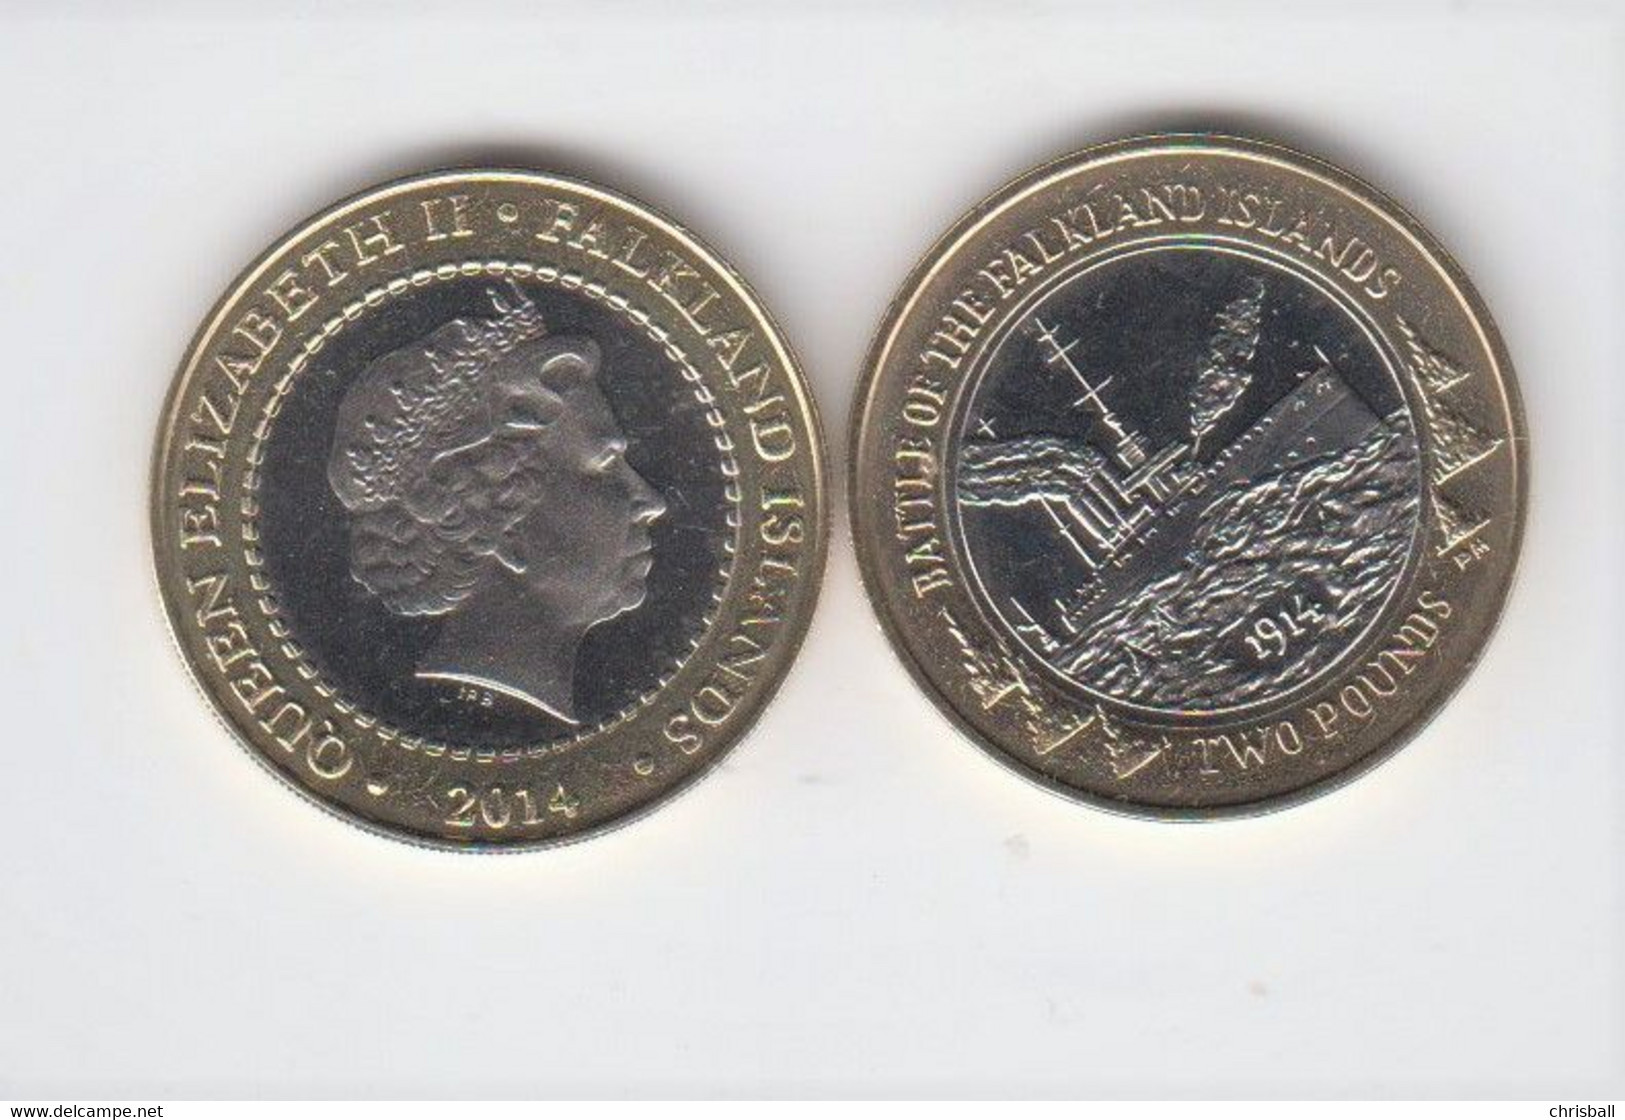 Falkland Island £2 Two Pound Coin - 2014 HMS Glasgow Uncirculated - Falkland